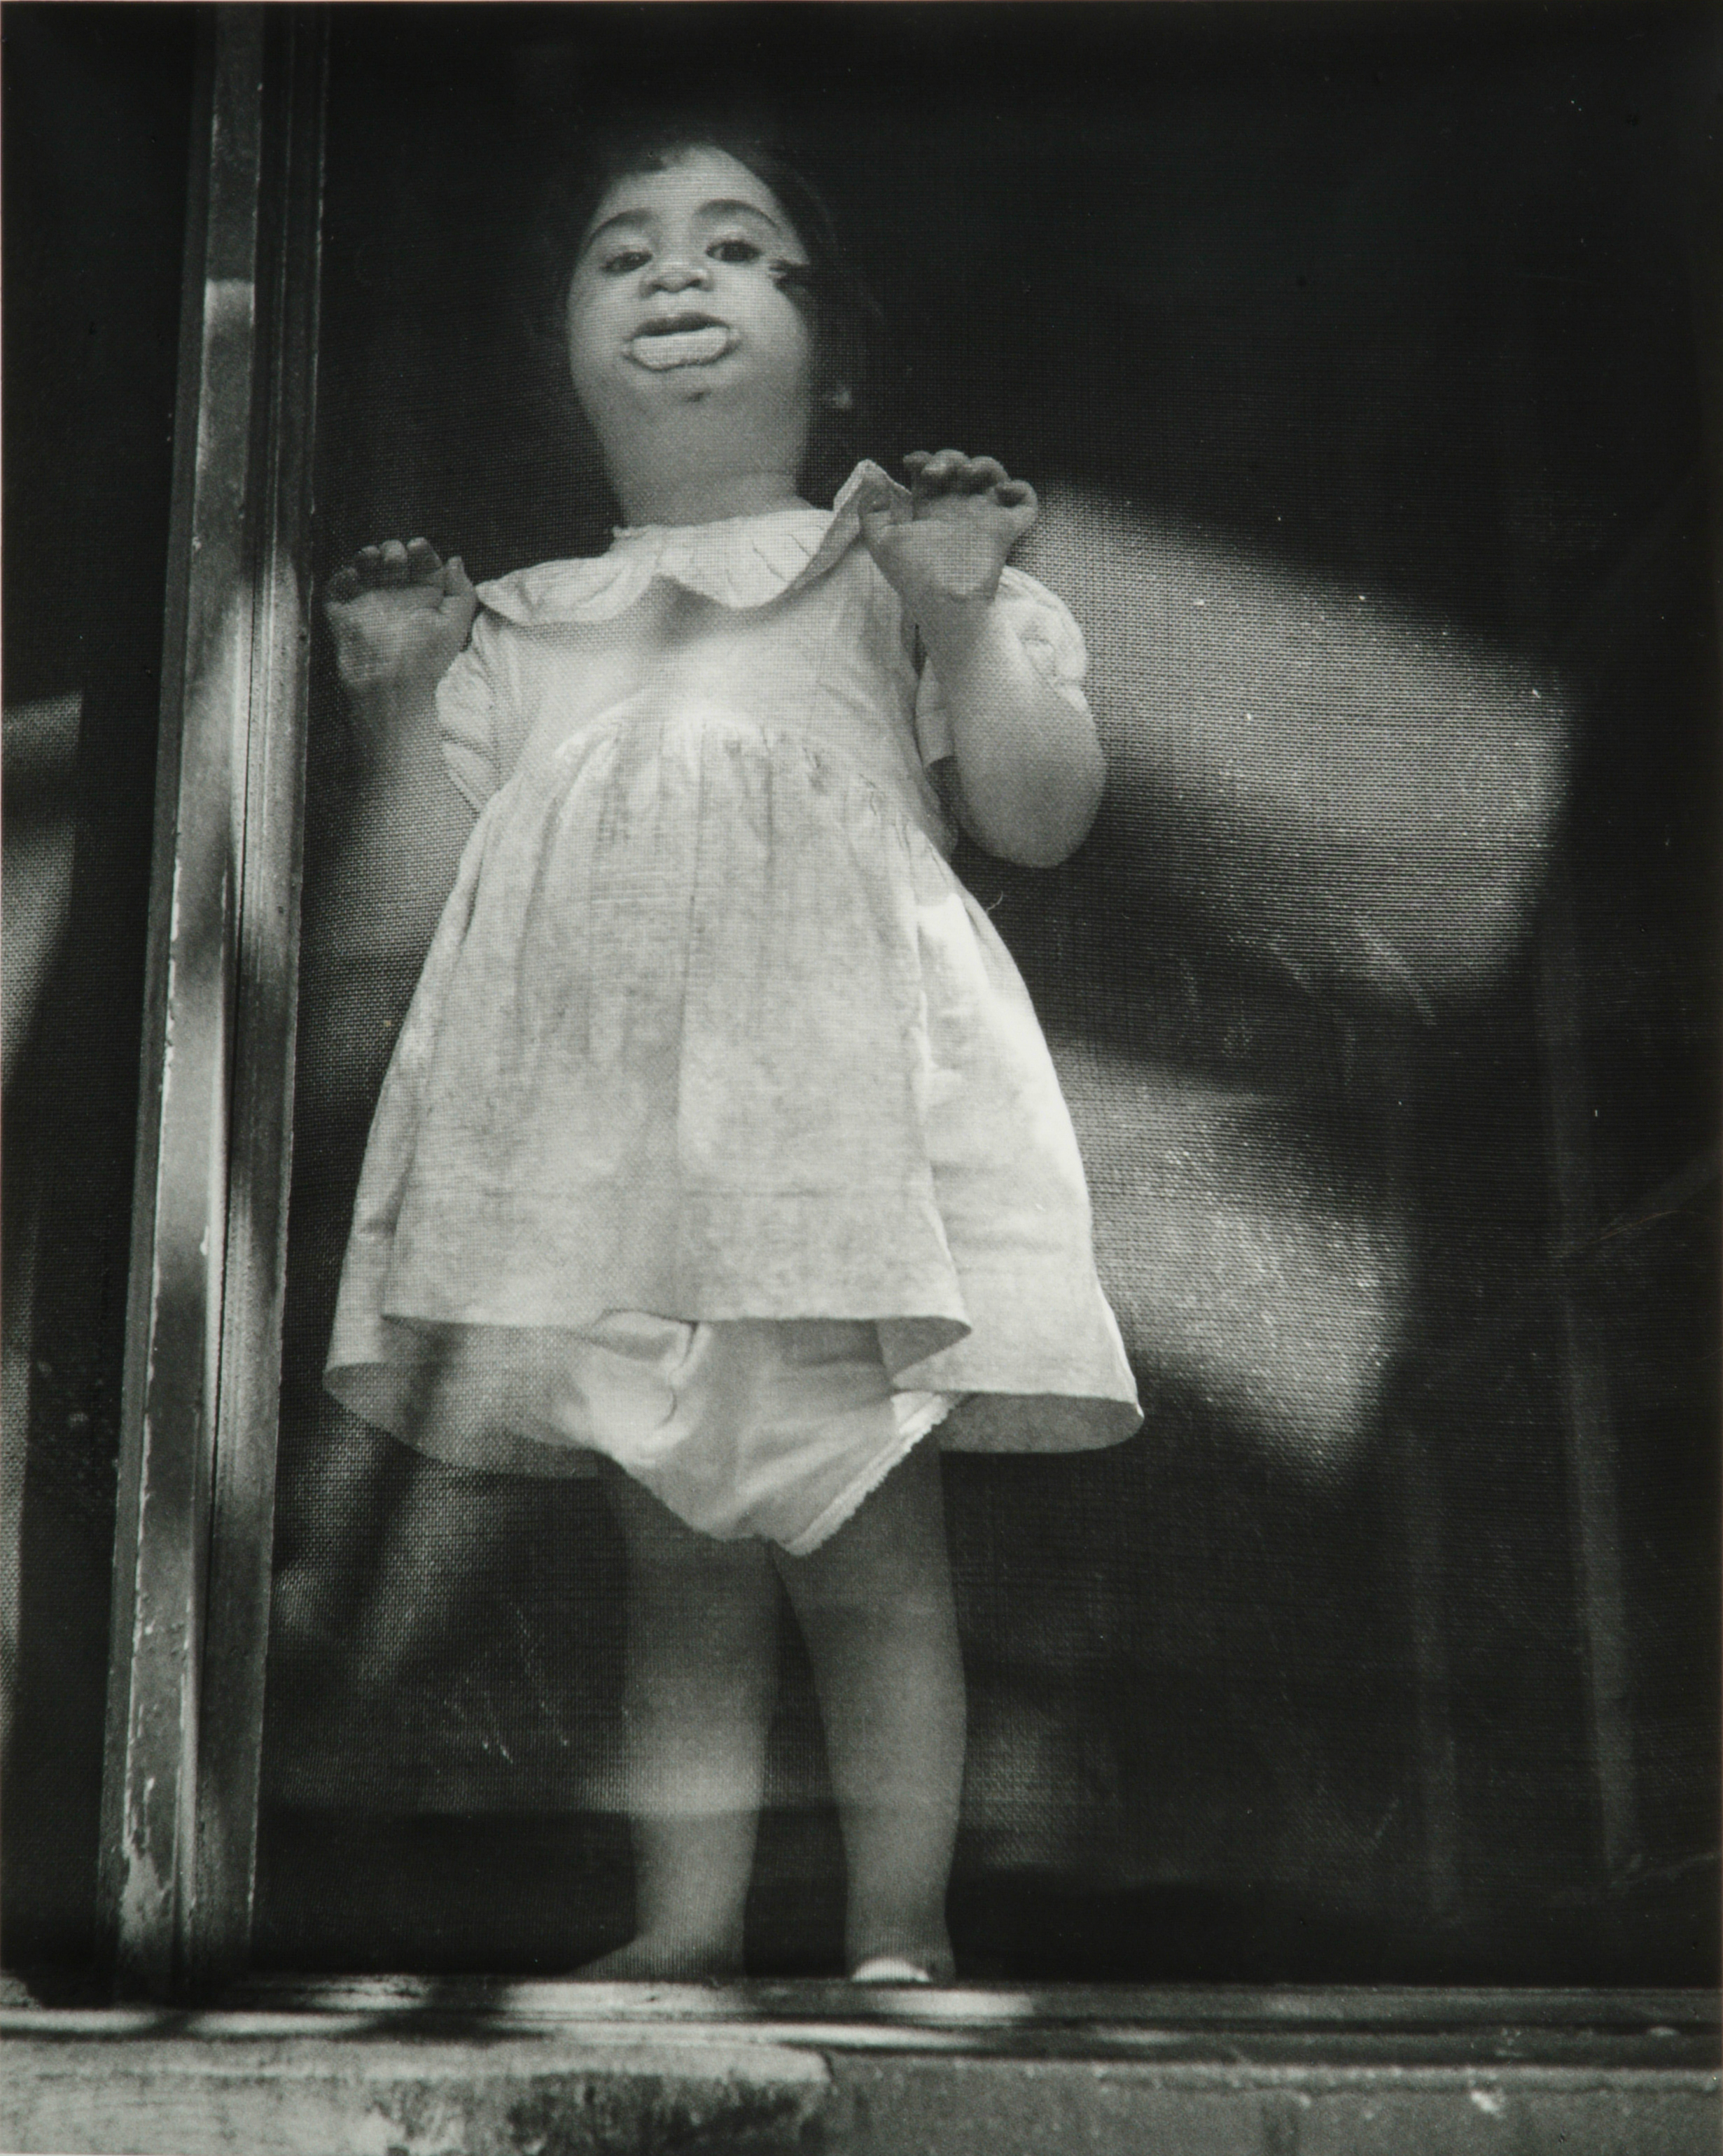 The Screen, Child in Window, Lower East Side